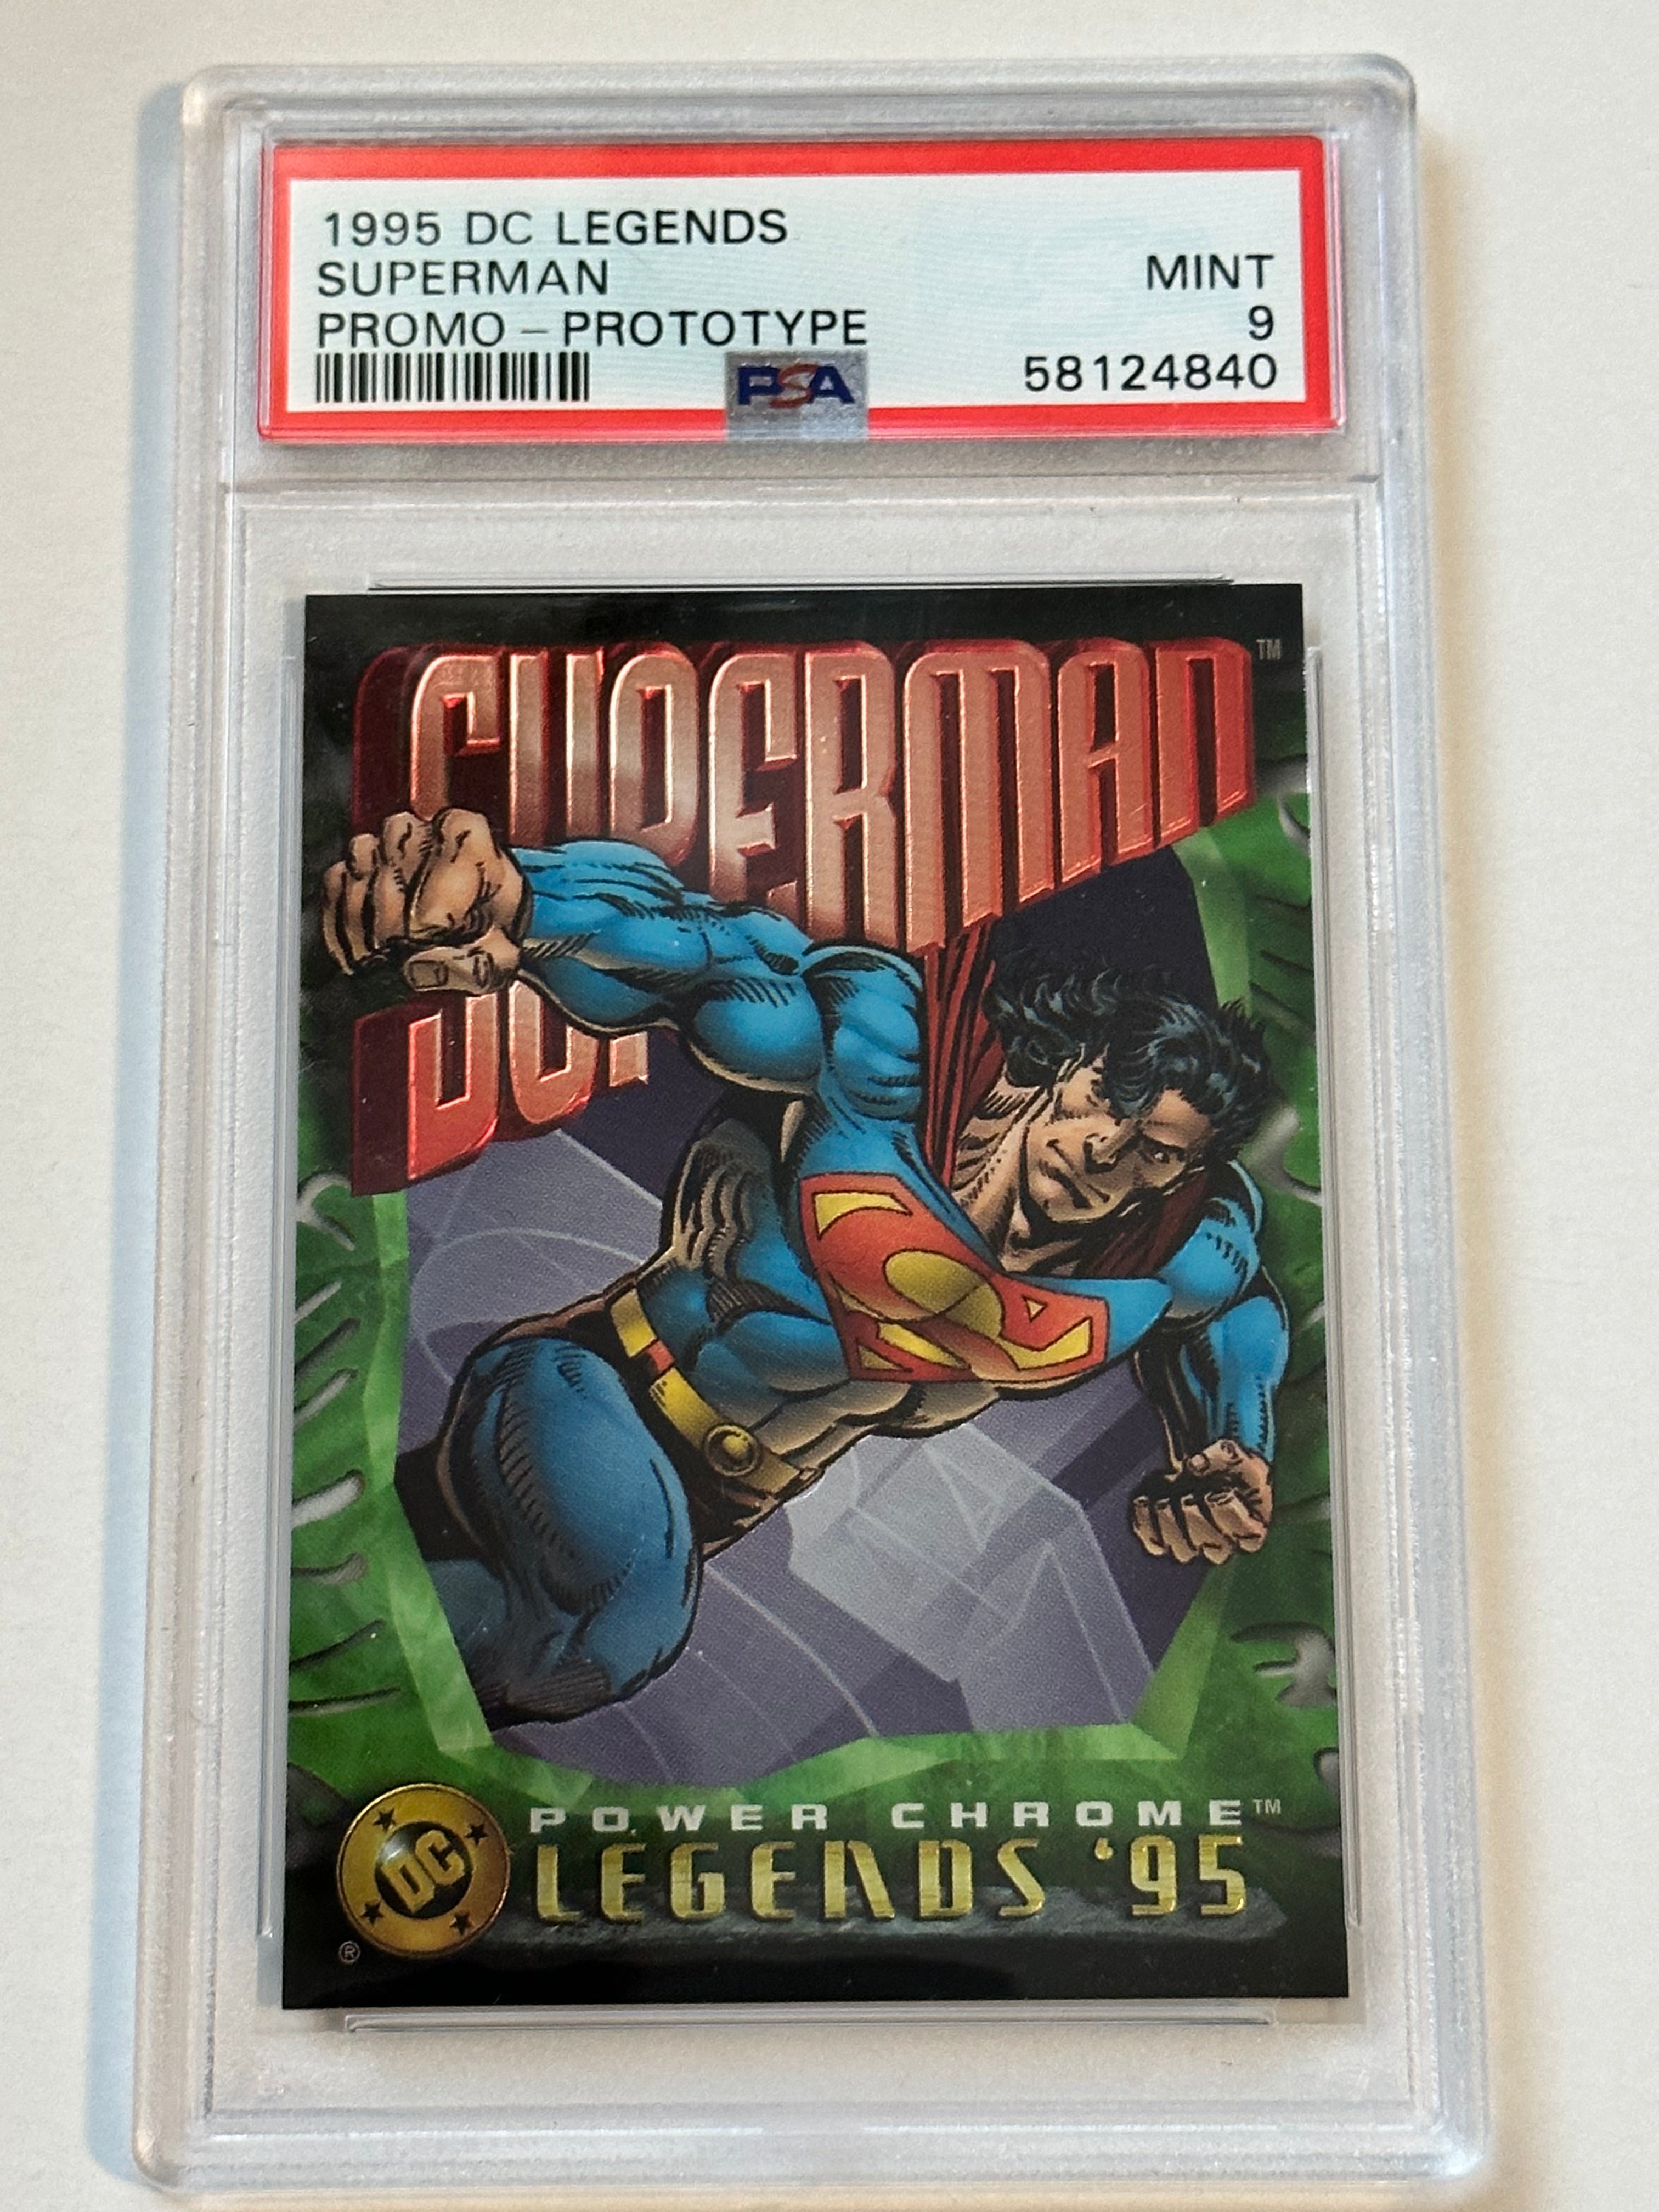 Superman DC legends foil promo PSA 9 high grade card